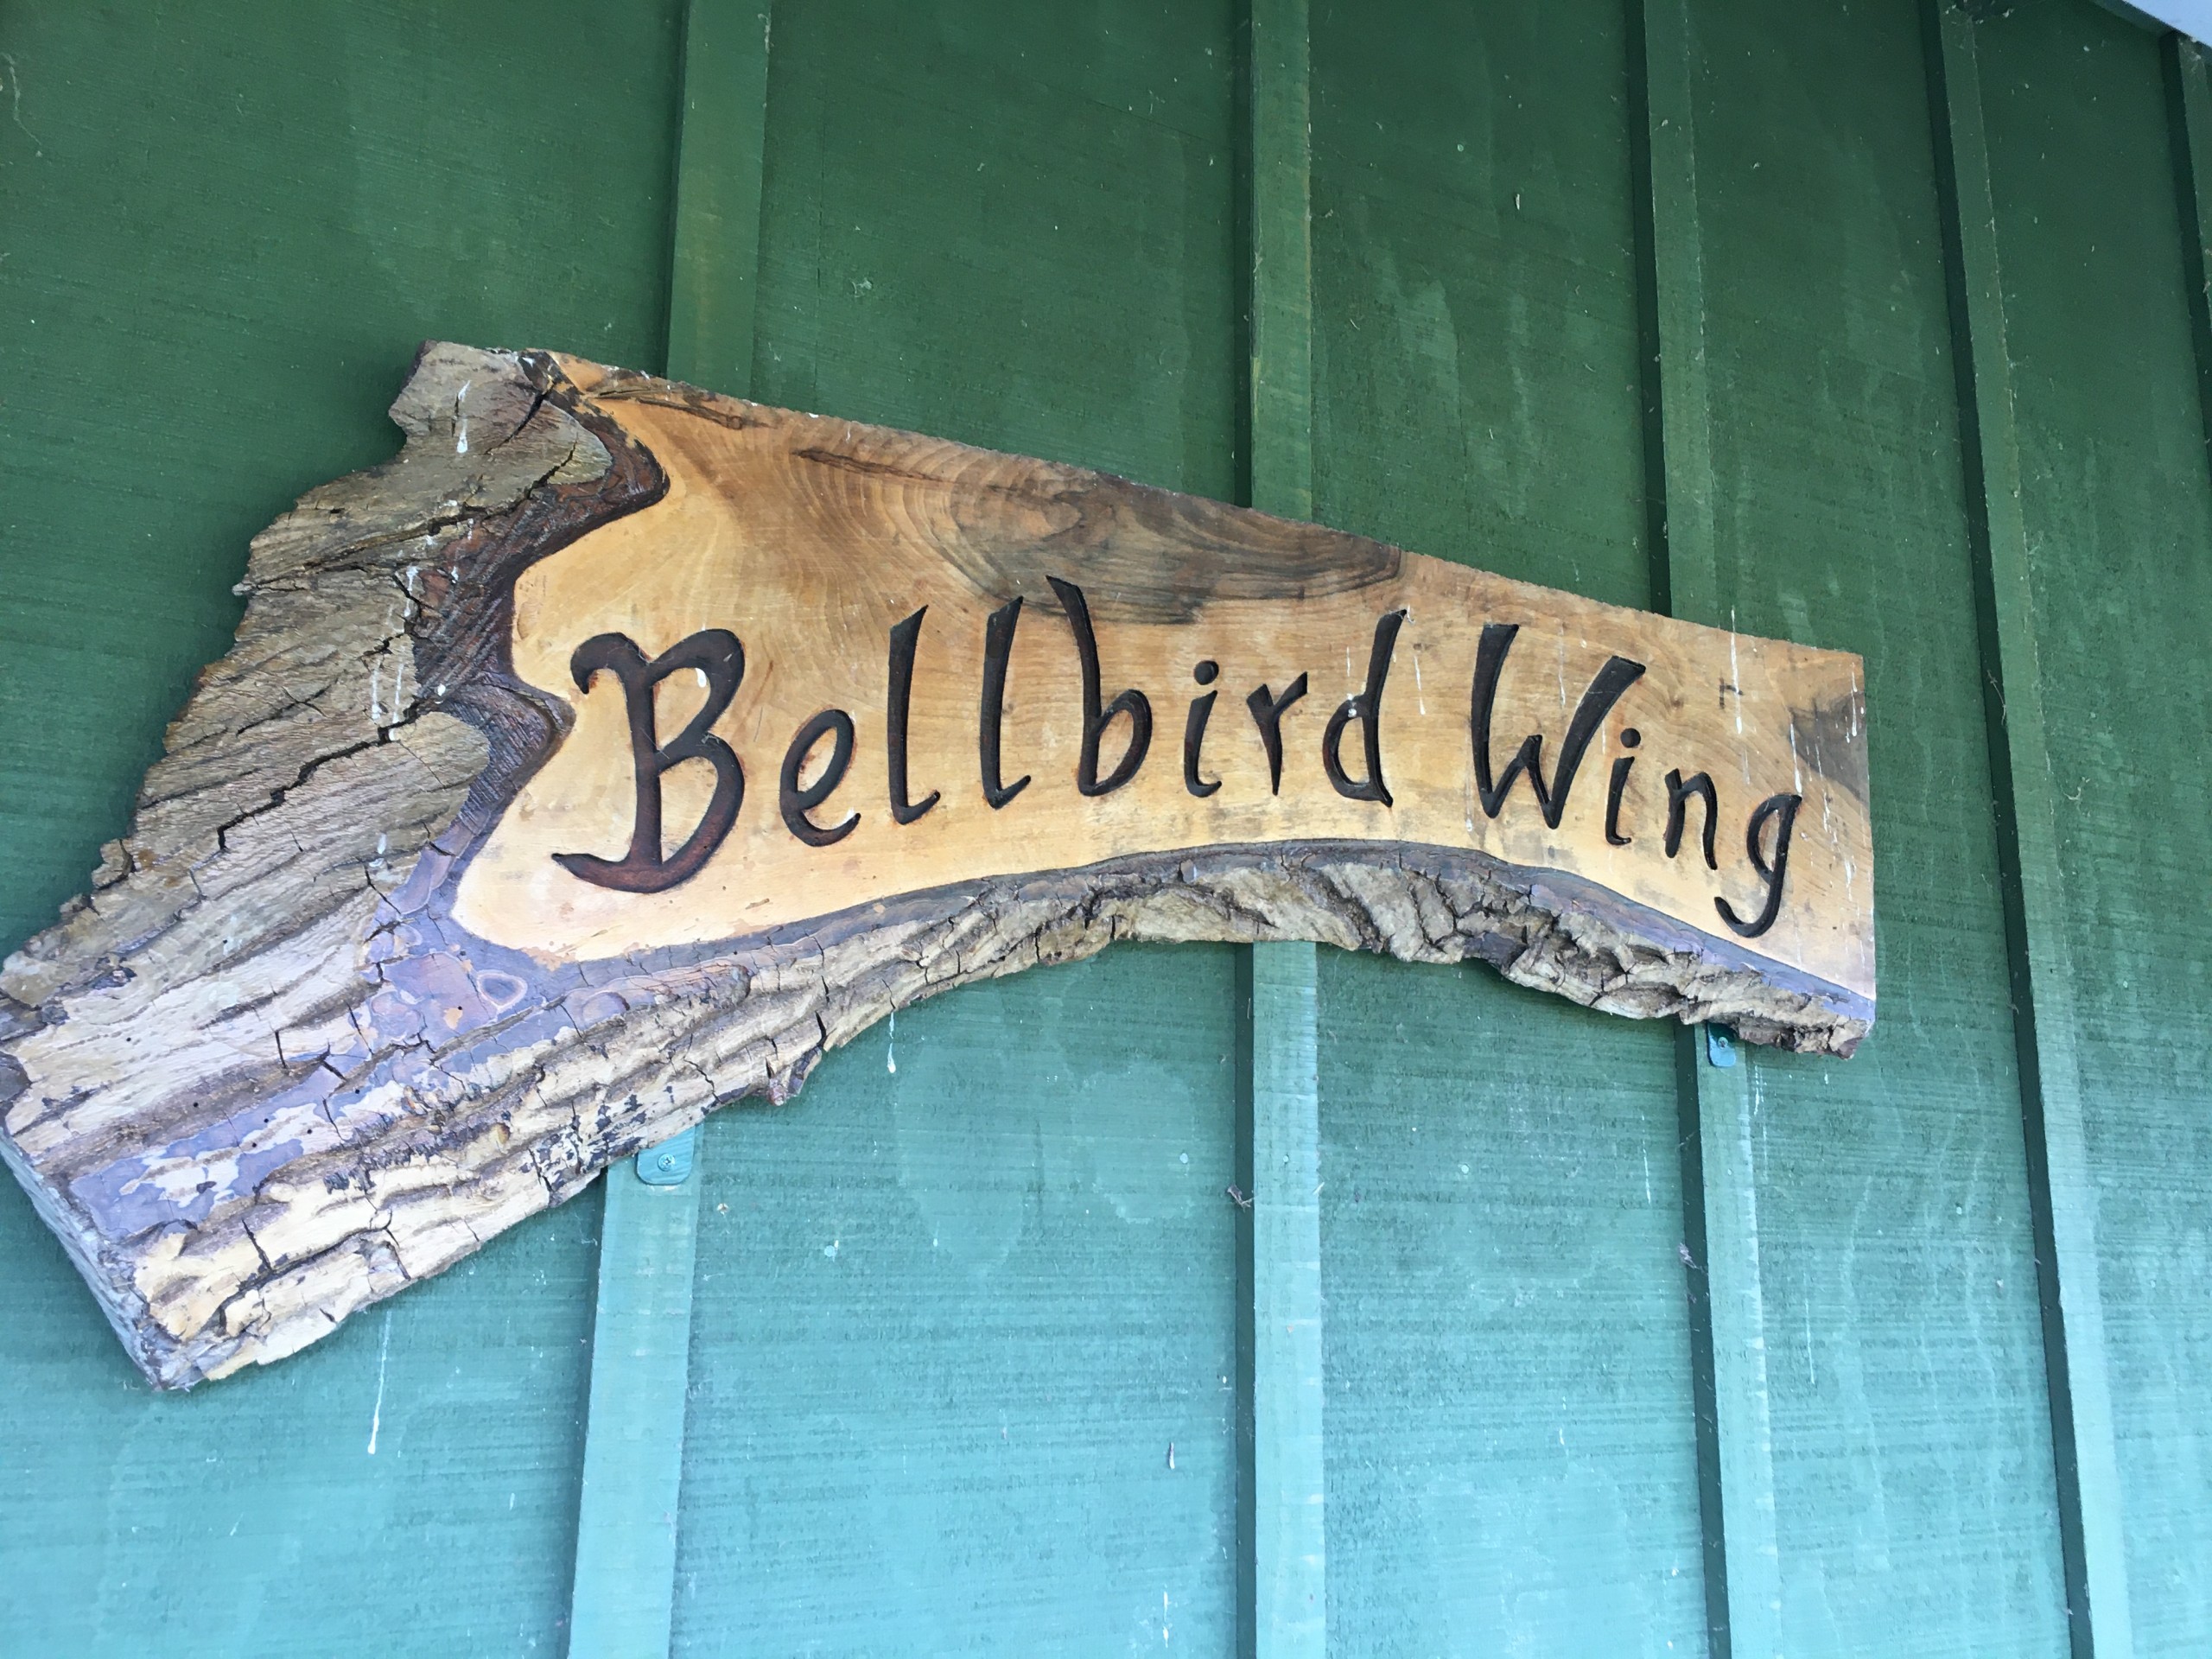 Bellbird Wing